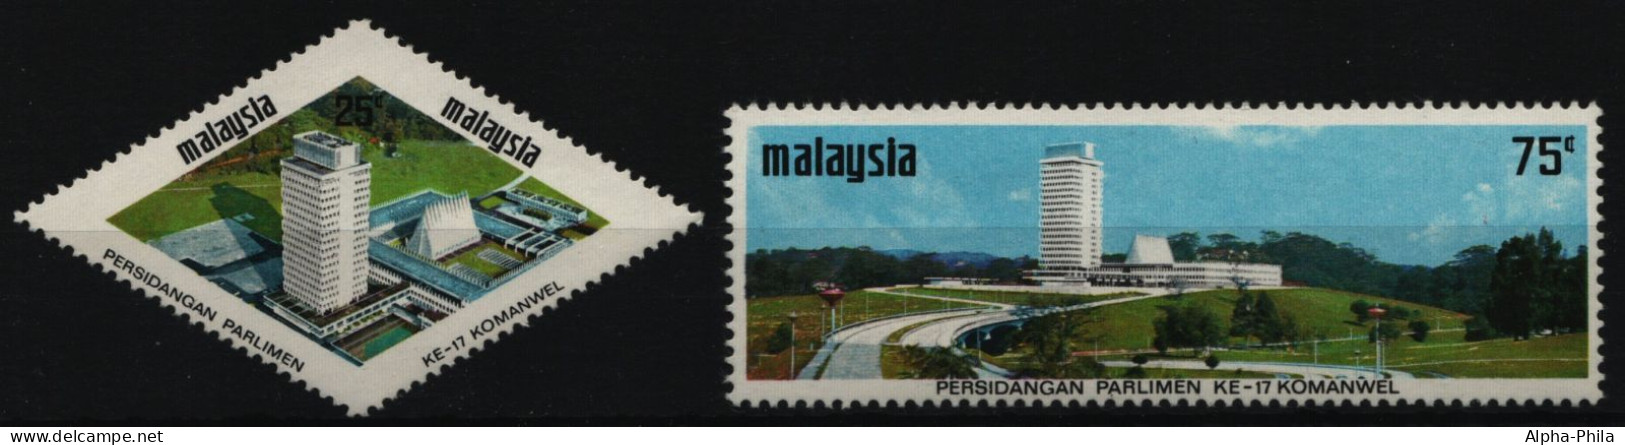 Malaysia 1971 - Mi-Nr. 81-82 ** - MNH - Parlament - Malaysia (1964-...)